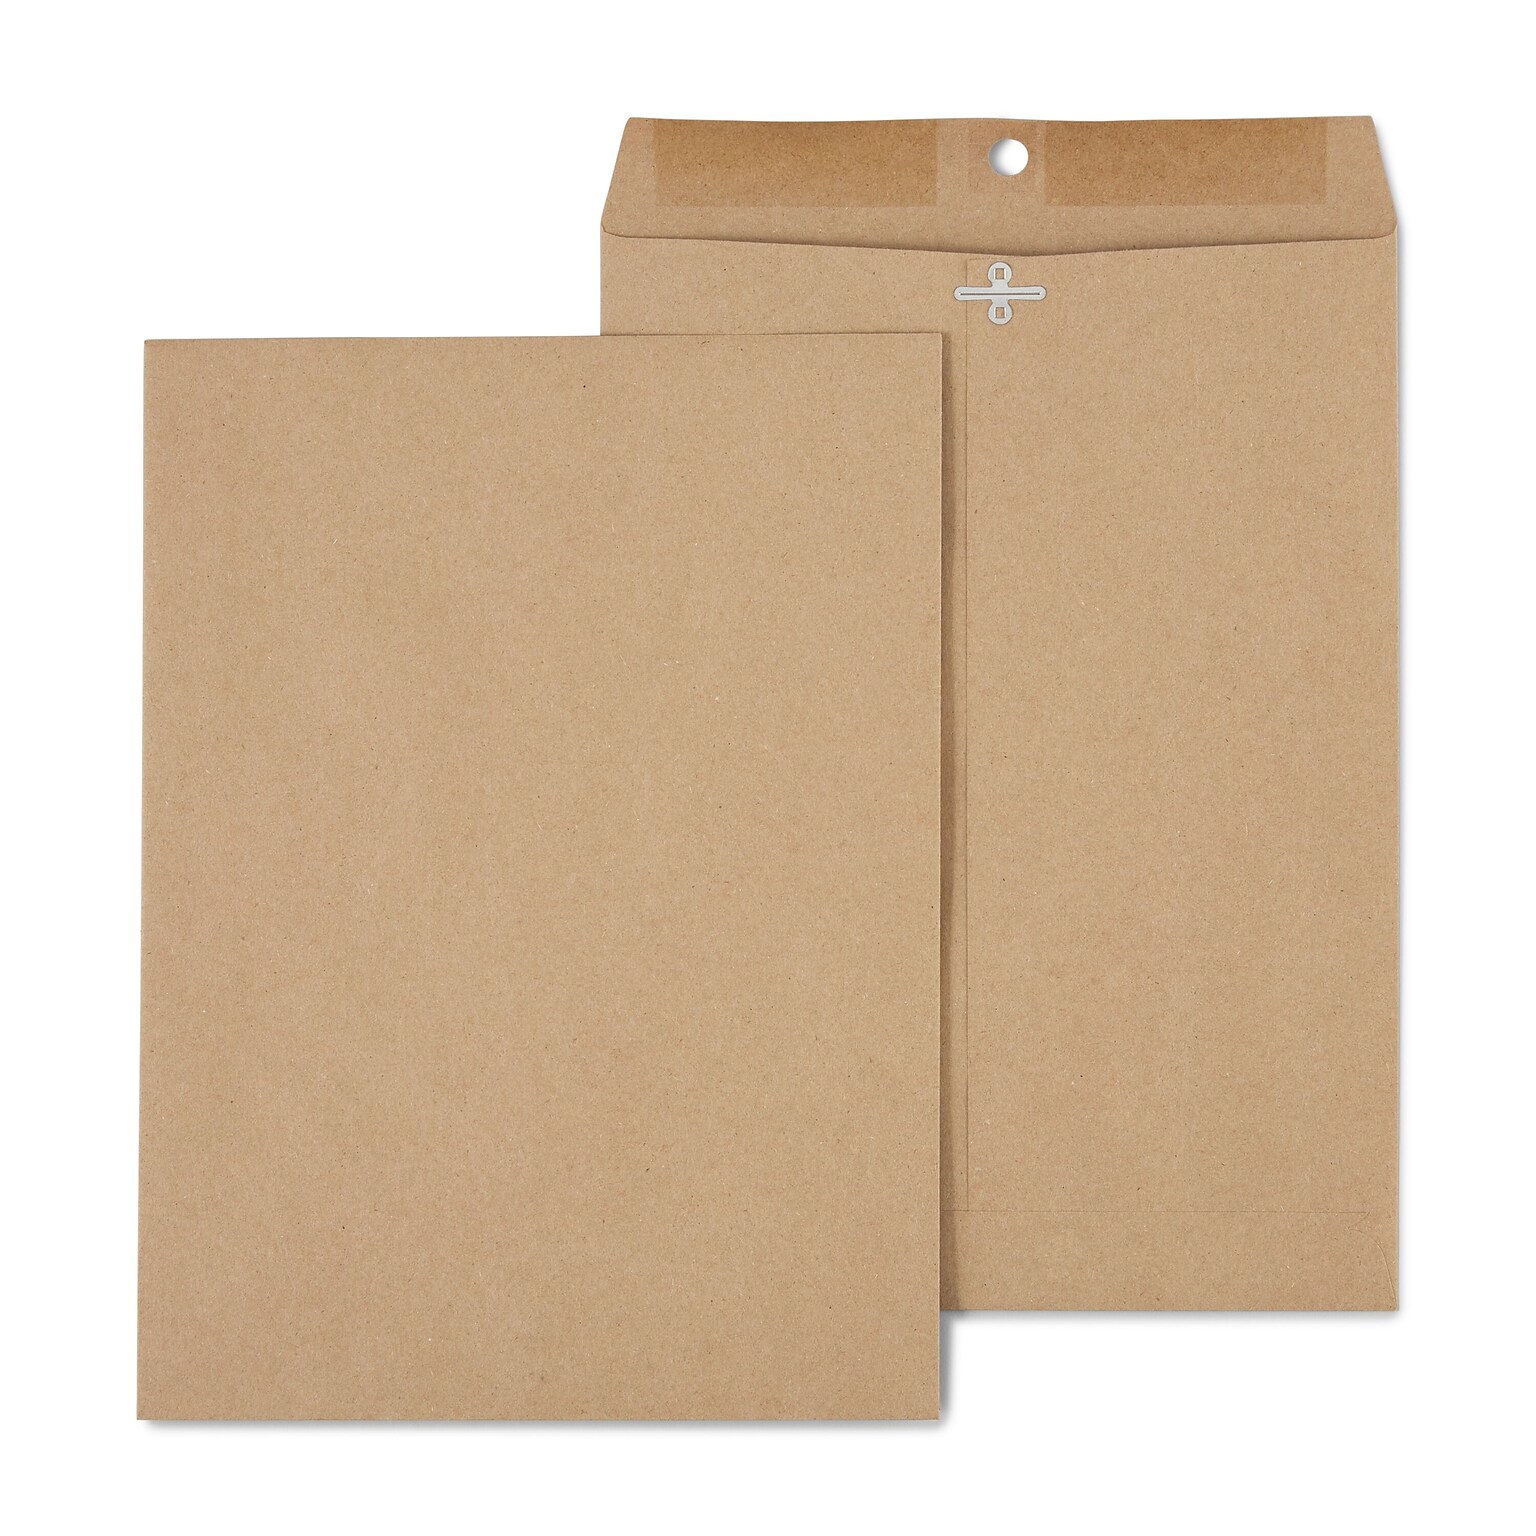 Staples® Clasp & Moistenable Glue #10 Catalog Envelope, 9 x 12, Natural Brown, 100/Box (ST19964-CC)